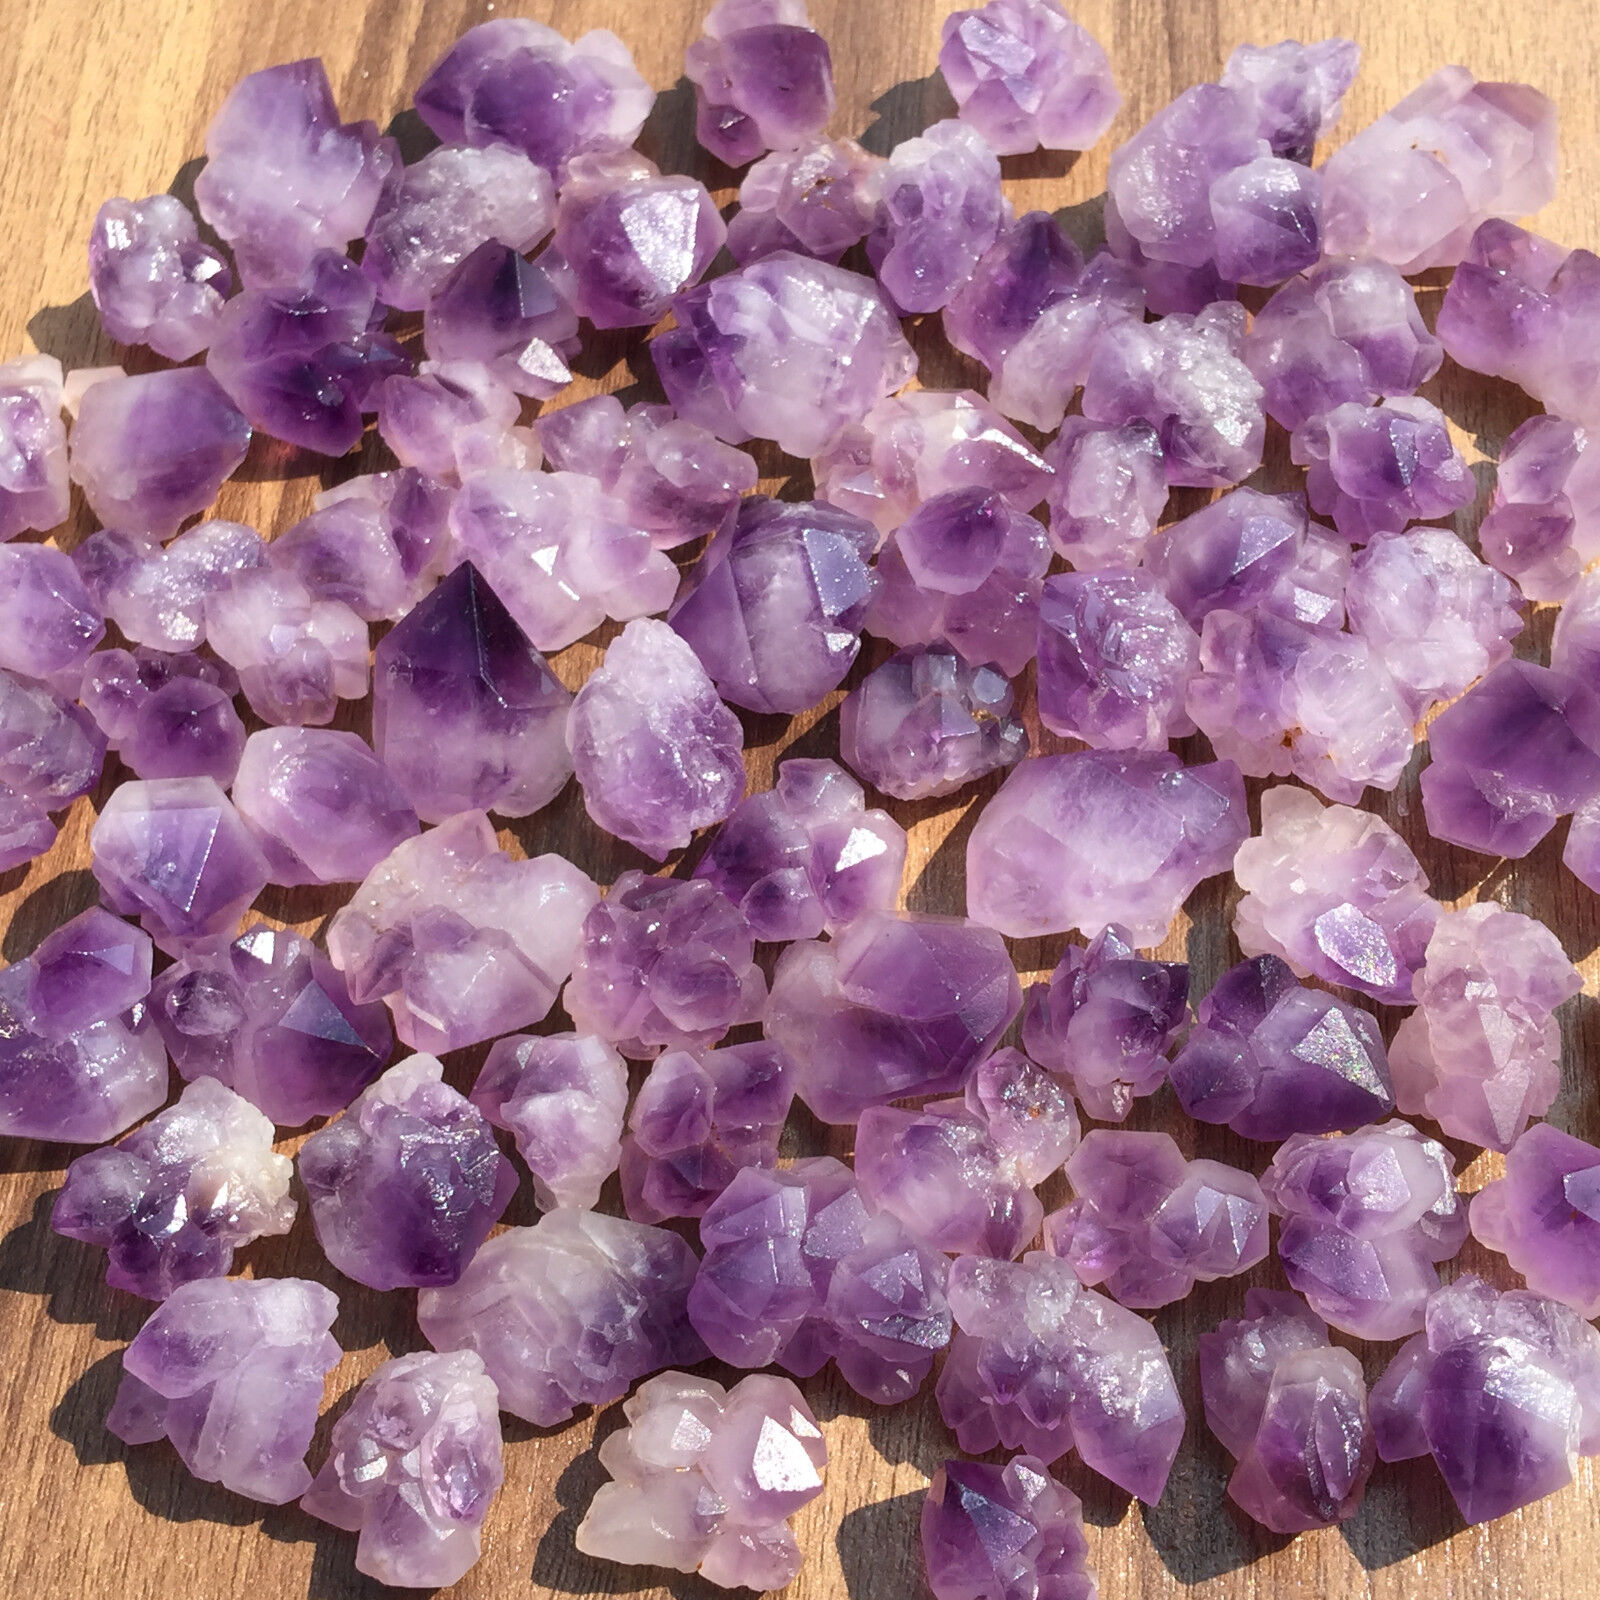 1LB natural Amethyst flowers quartz crystal healing Mineral wholesale random